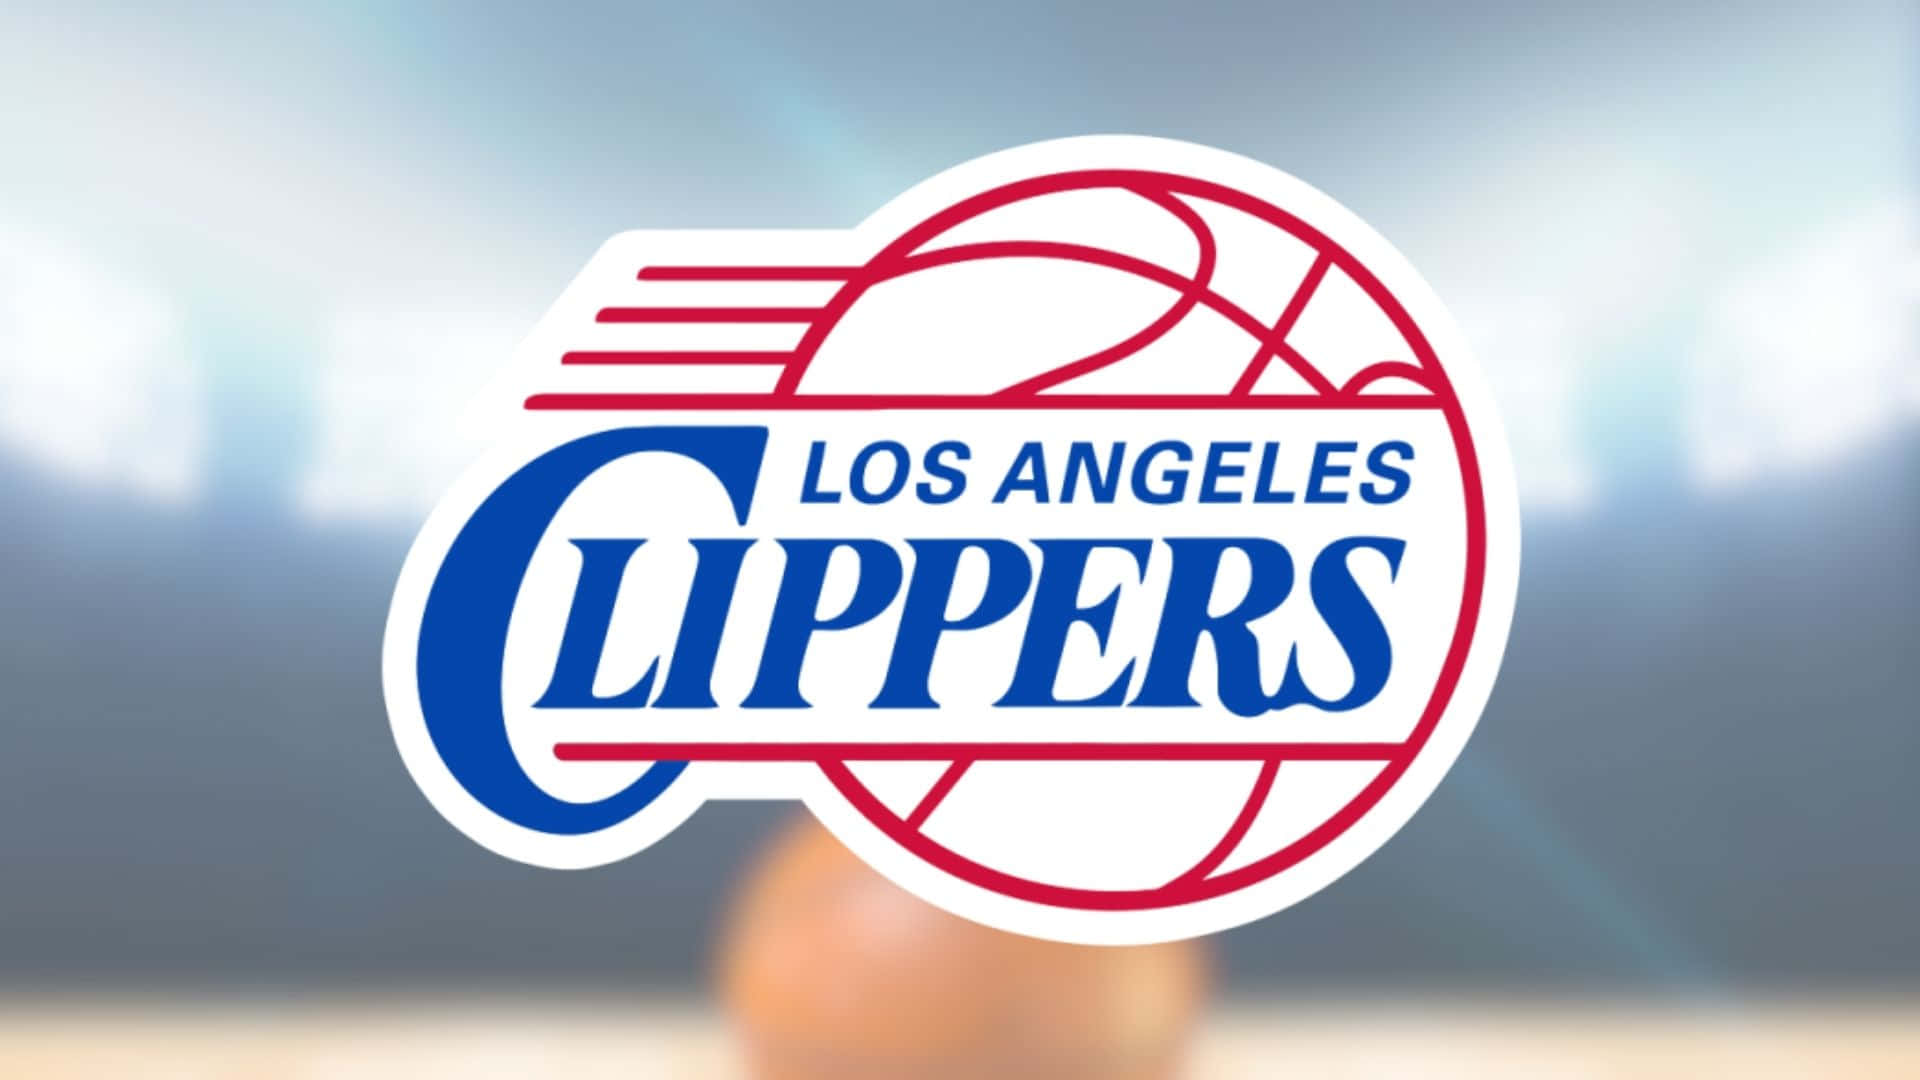 Losangeles Clippers Kommer Ud For At Spille Wallpaper